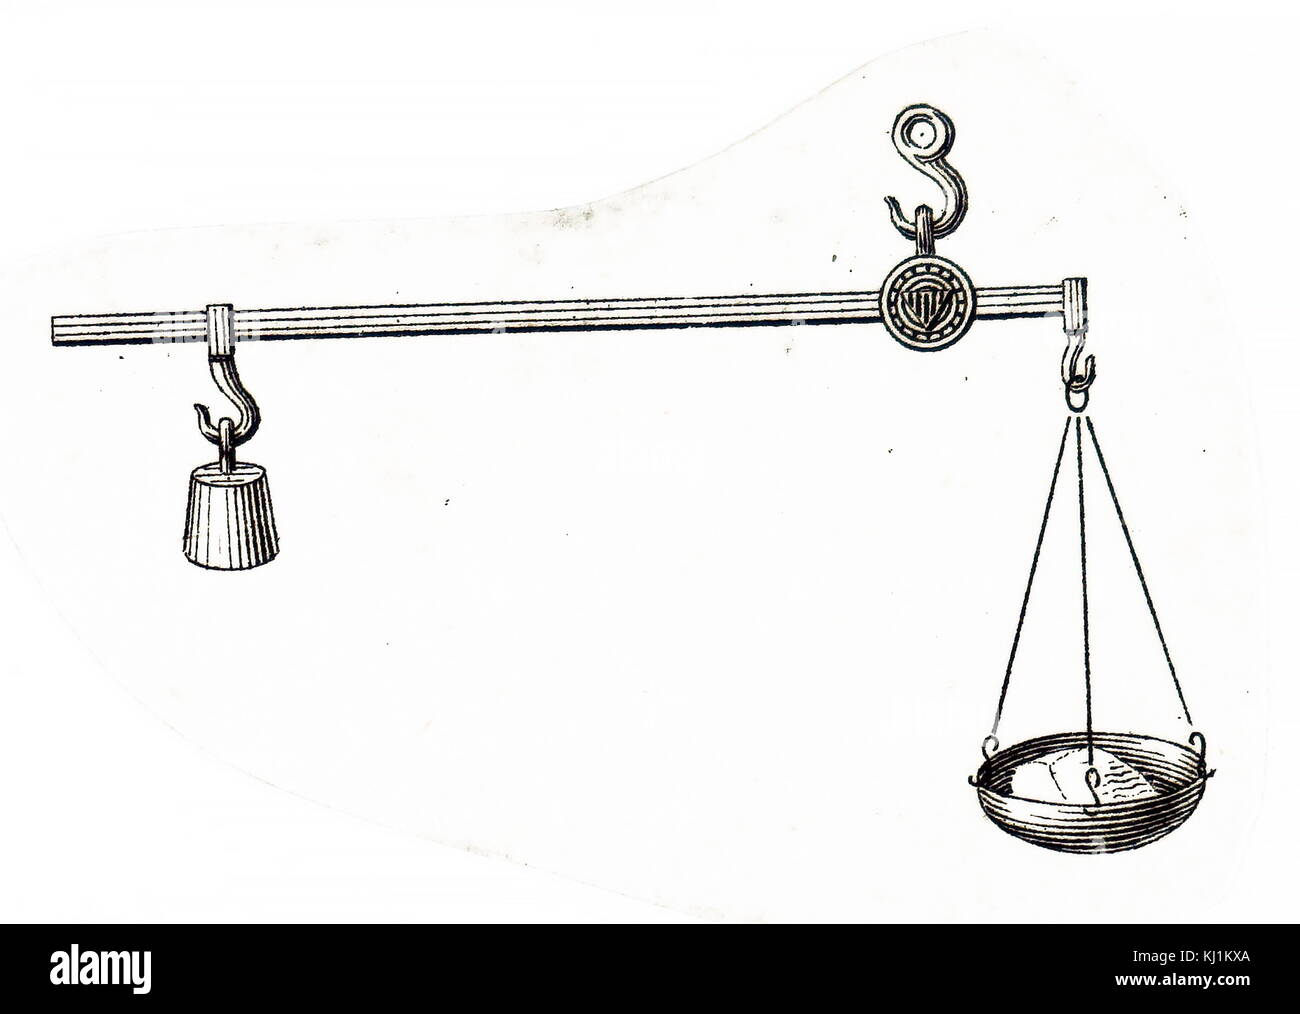 https://c8.alamy.com/comp/KJ1KXA/illustration-of-an-19th-century-mechanical-weighing-scales-KJ1KXA.jpg